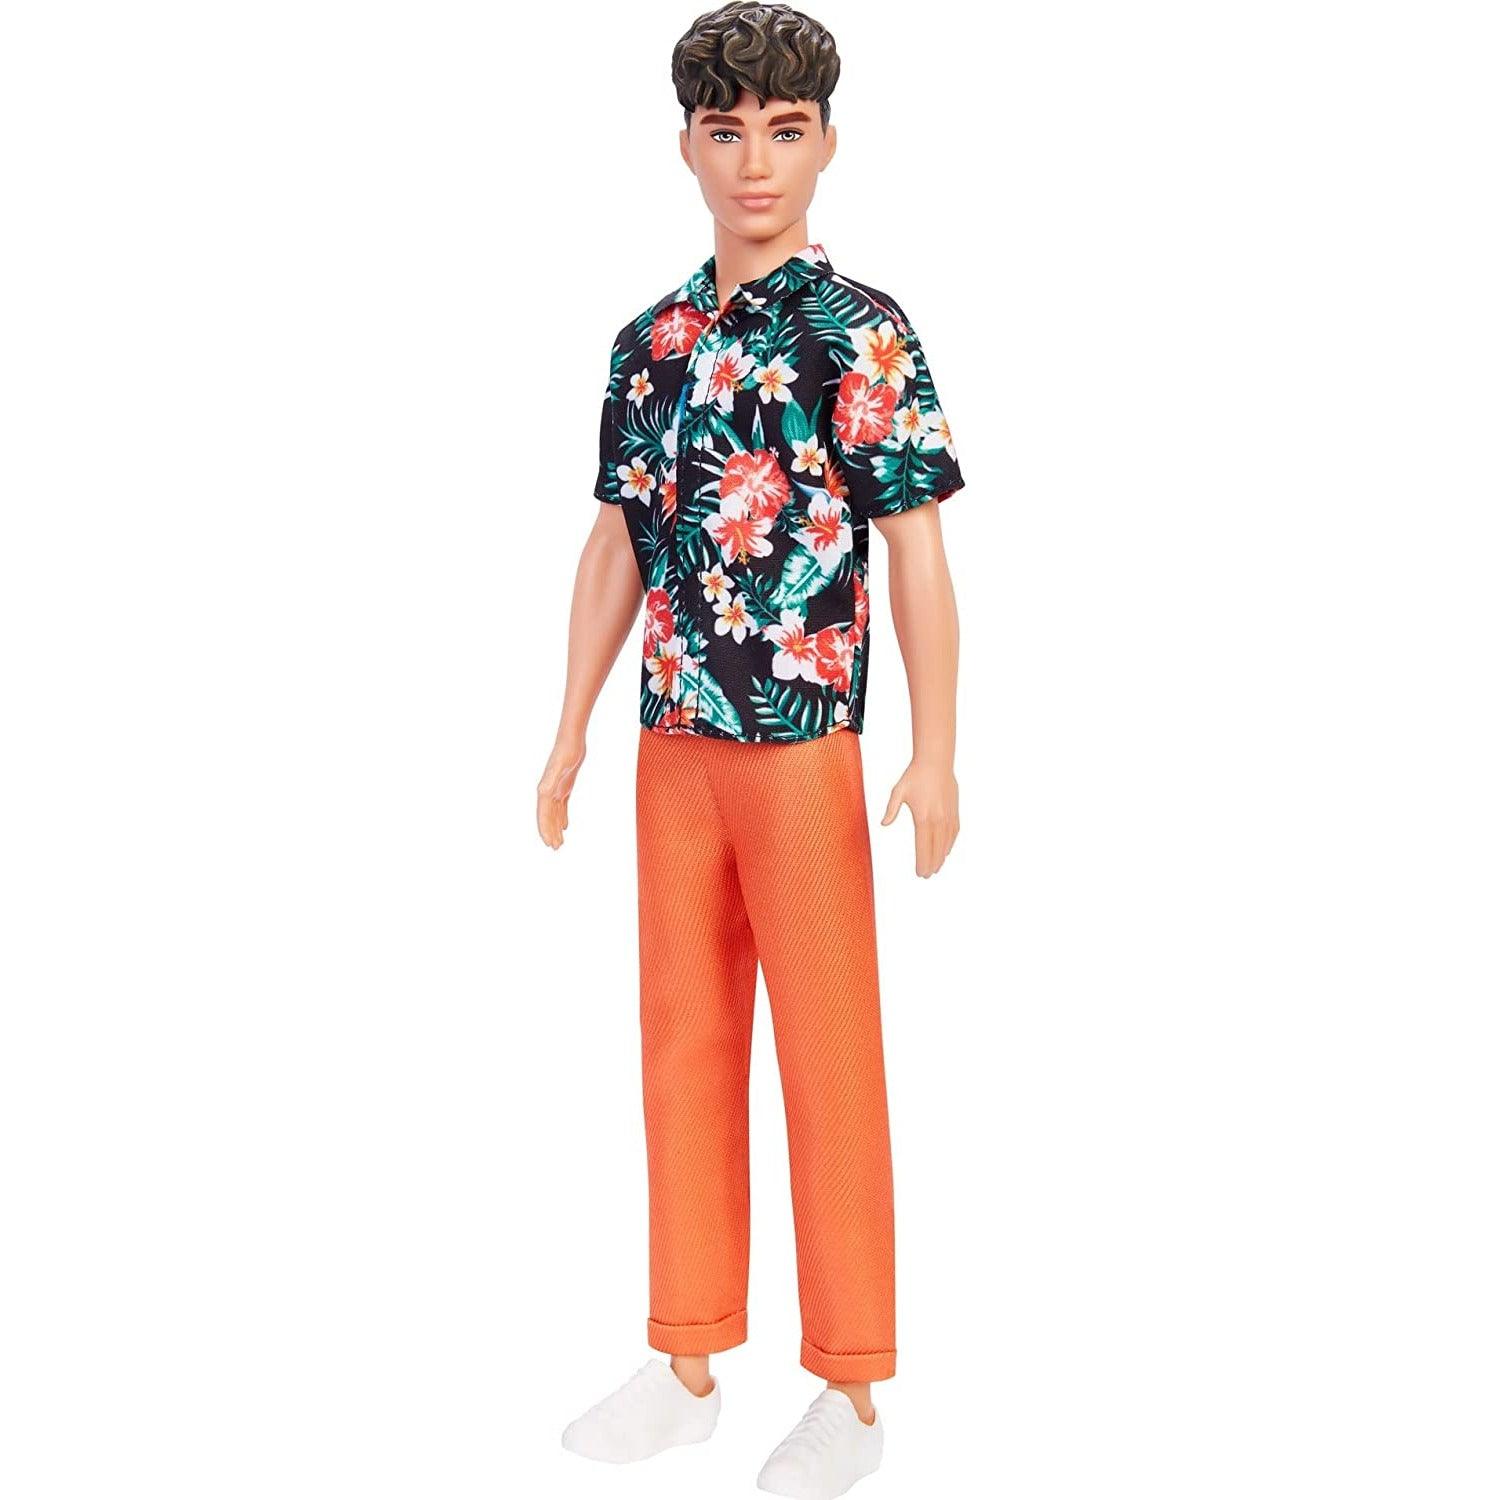 Barbie Ken Fashionistas Doll #184, Brunette Cropped Hair, Floral Hawaiian Shirt, Orange Cuffed Pants, White Deck Shoes.